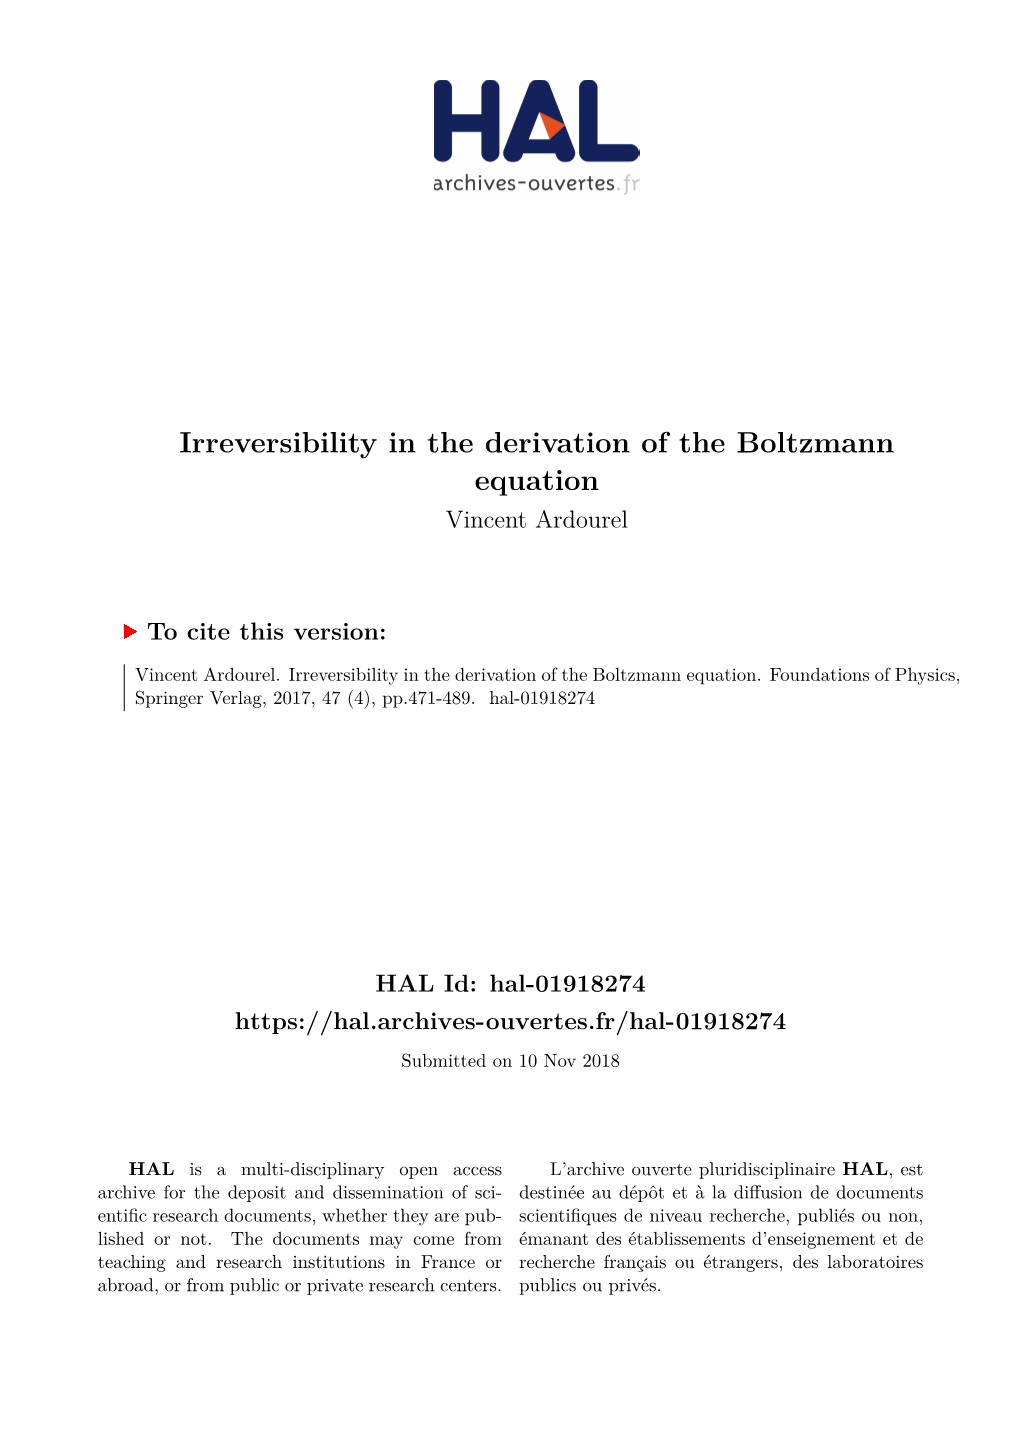 Irreversibility in the Derivation of the Boltzmann Equation Vincent Ardourel